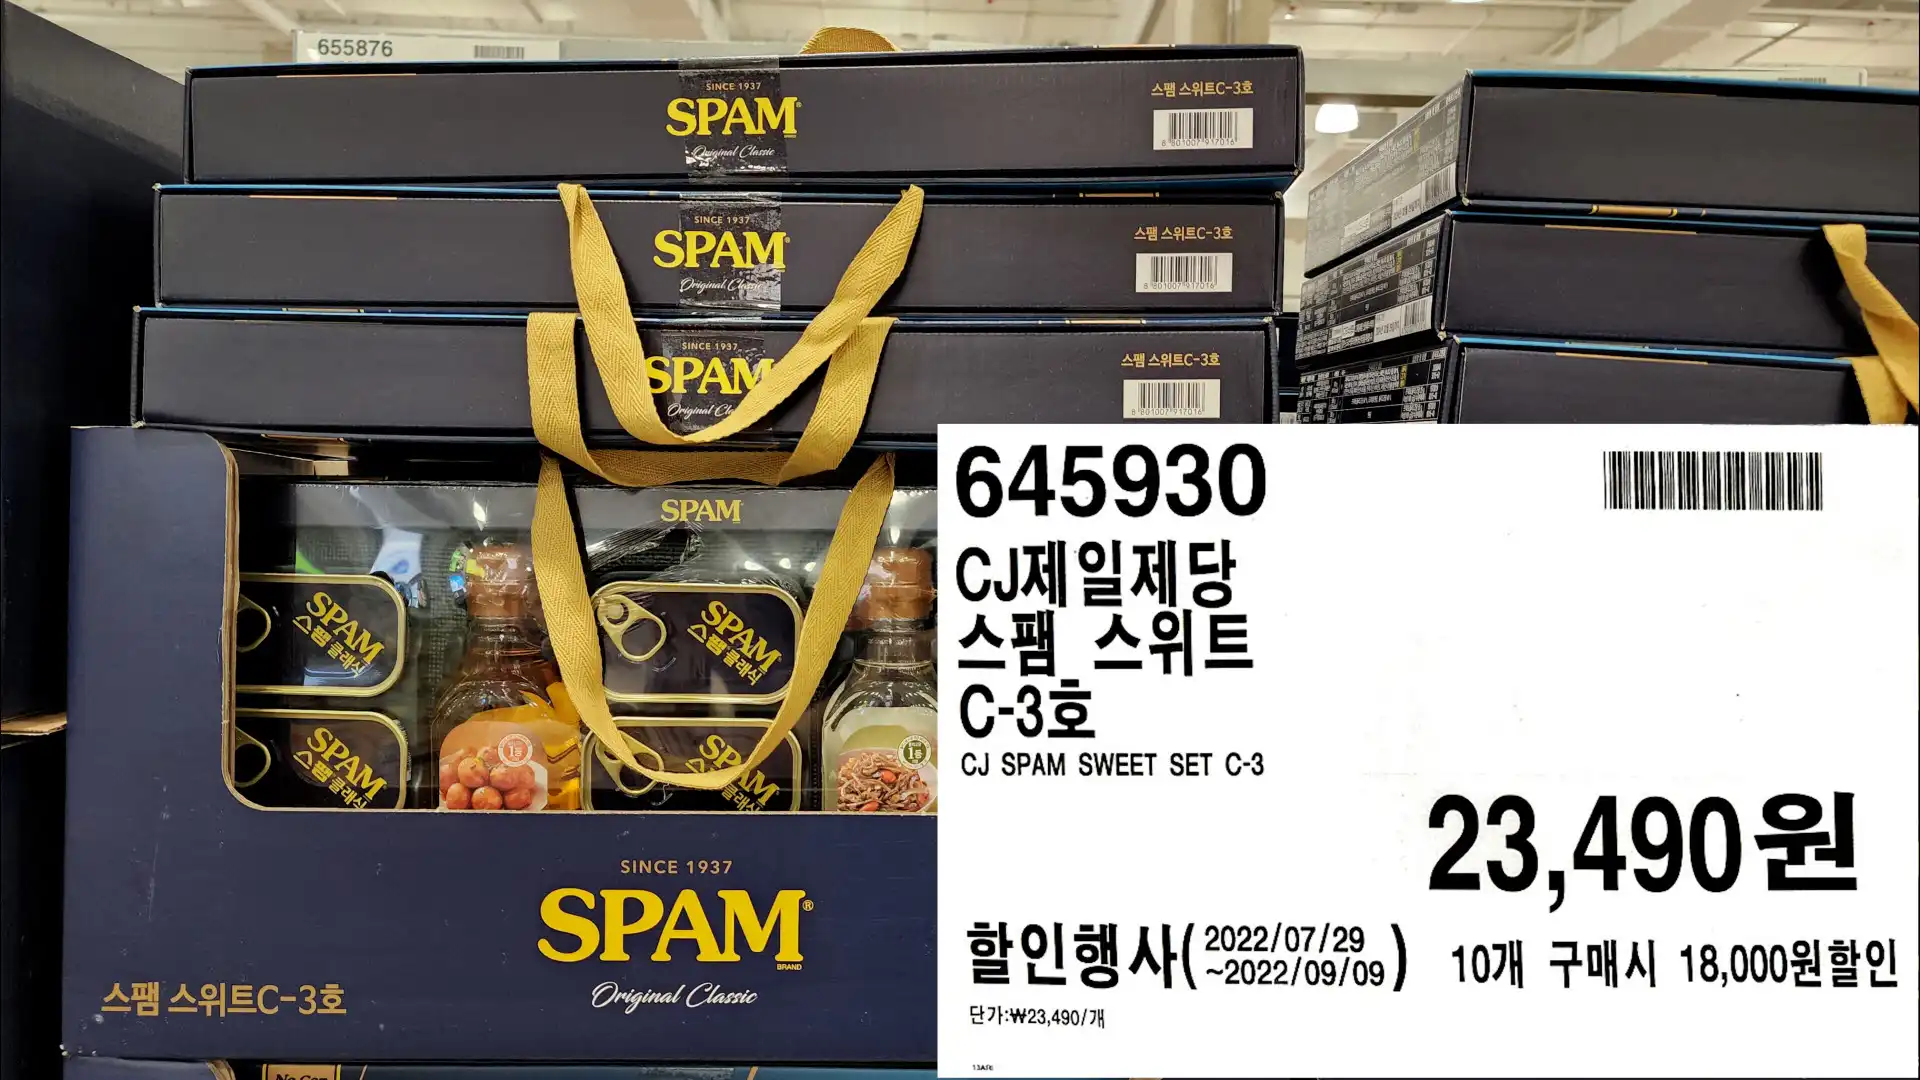 CJ제일제당
스팸 스위트
C-3호
CJ SPAM SWEET SET C-3
23&#44;490원
10개 구매시 18&#44;000원할인